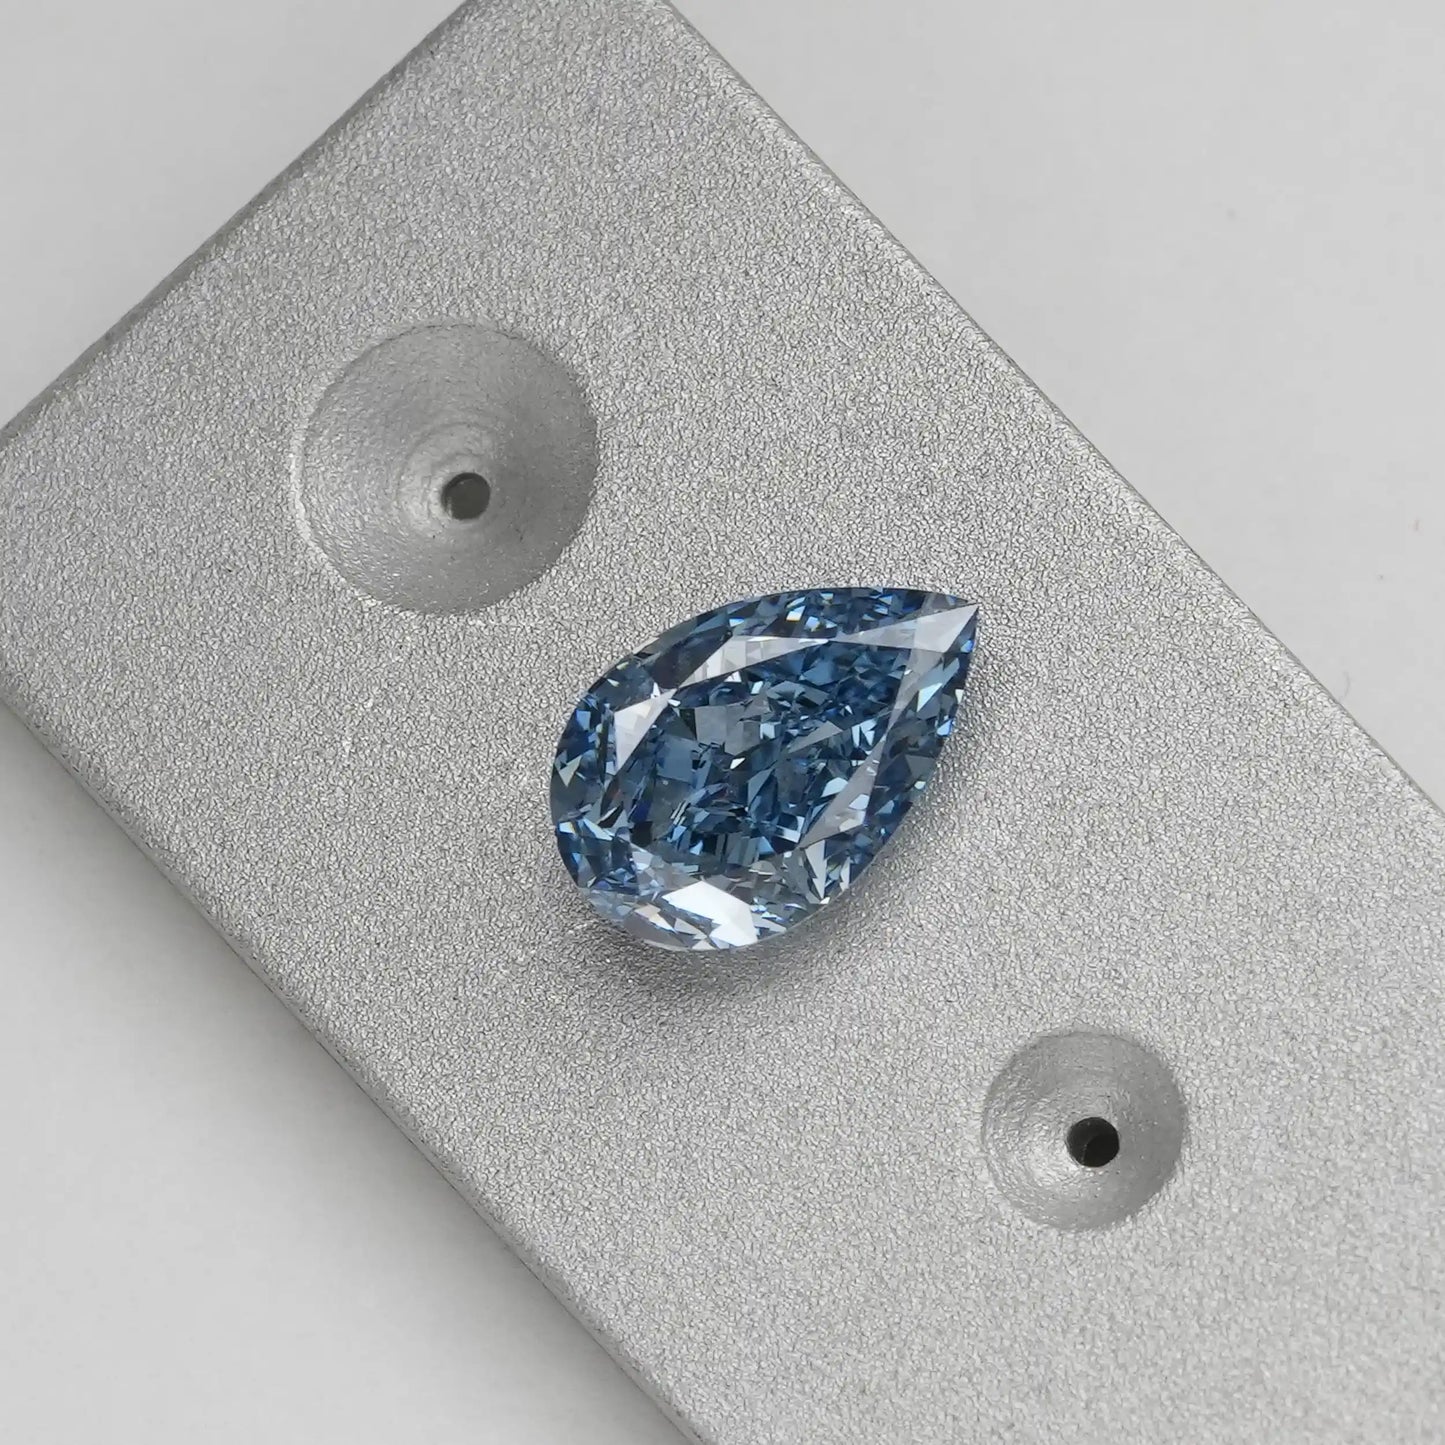 1.00 Carat  Blue Pear Cut Lab Grown Diamond